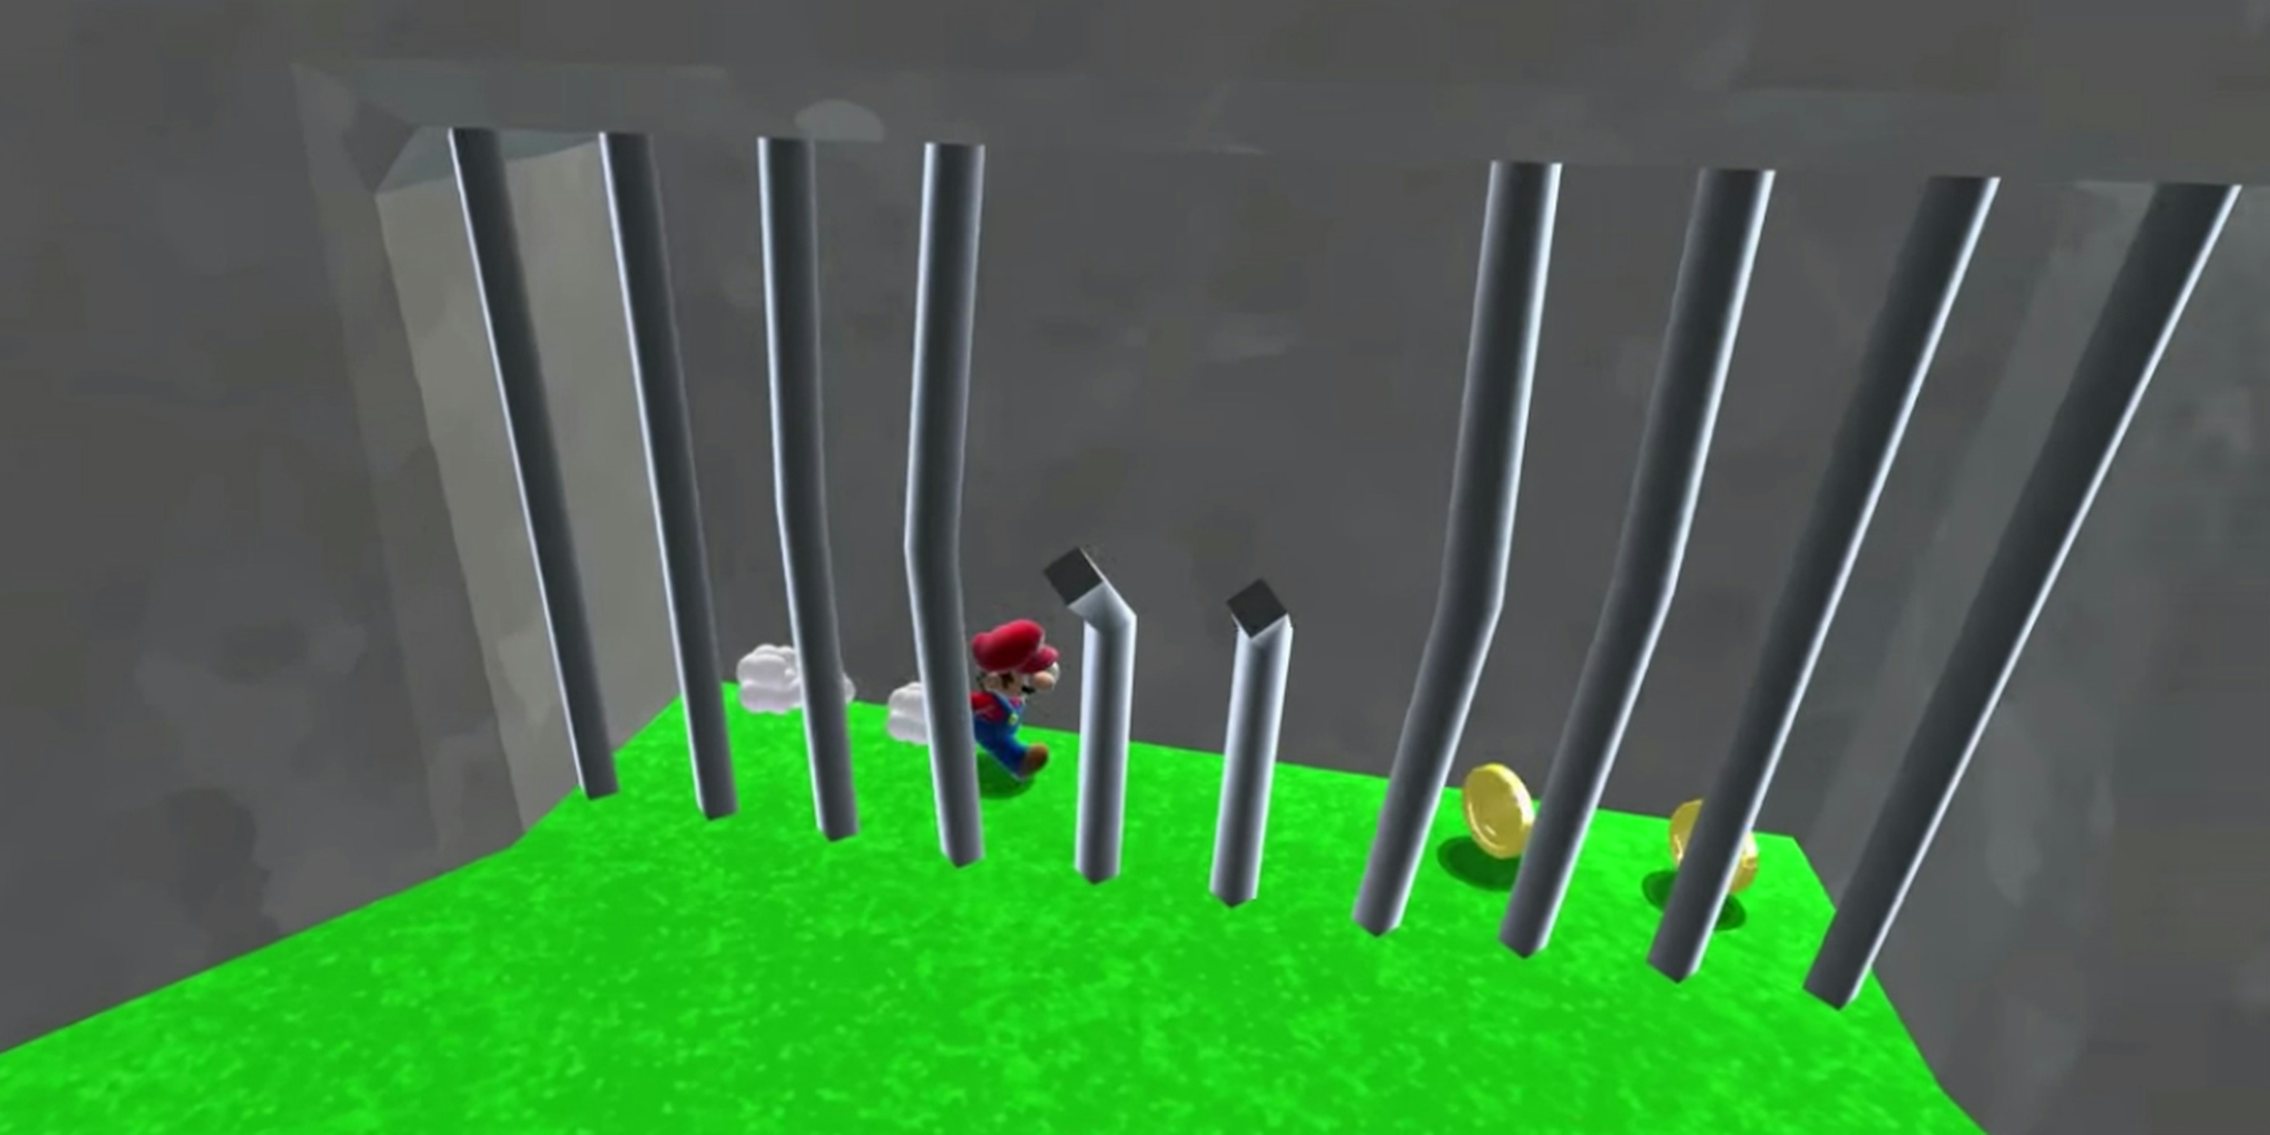 Super Mario 64 Online taken down by Nintendo copyright strikes